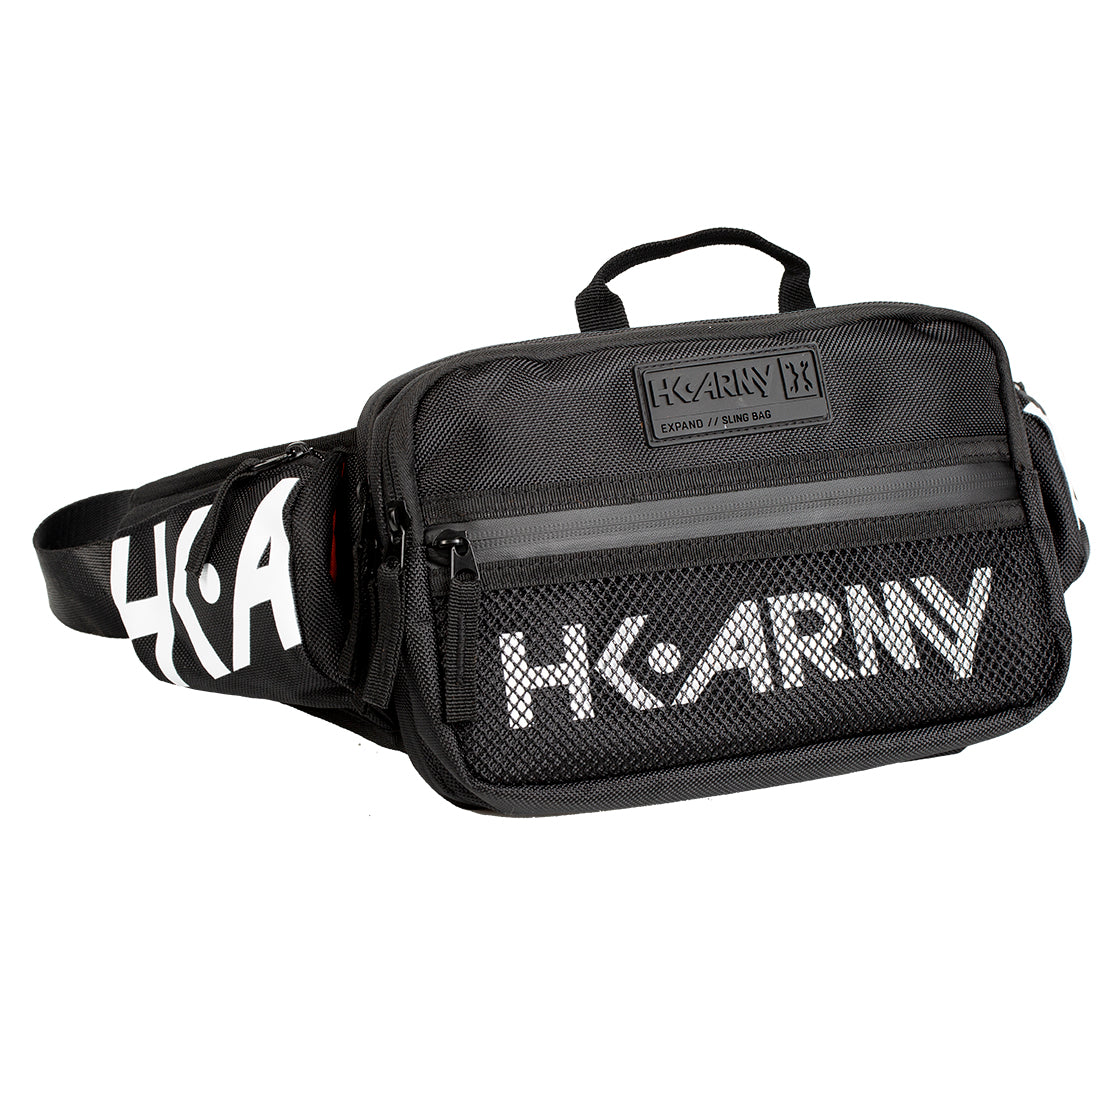 hk army bag